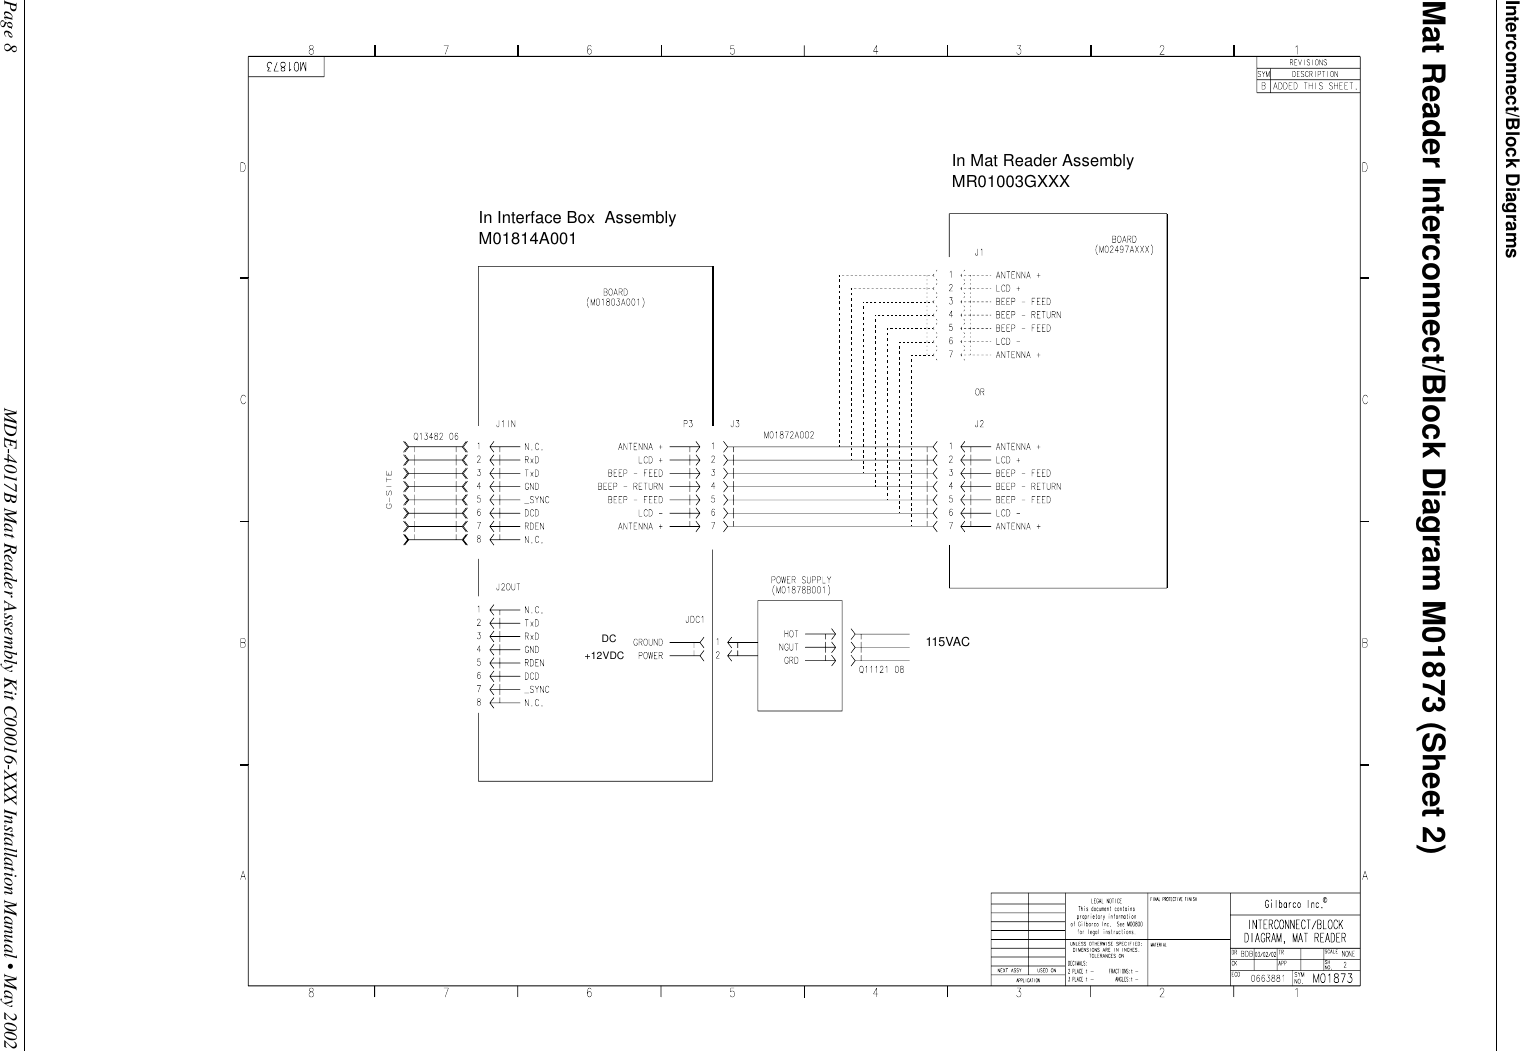 Preliminary  05/16/02Interconnect/Block DiagramsPage 8 MDE-4017B Mat Reader Assembly Kit C00016-XXX Installation Manual • May 2002Mat Reader Interconnect/Block Diagram M01873 (Sheet 2)DC+12VDC115VACIn Mat Reader AssemblyMR01003GXXXIn Interface Box  AssemblyM01814A001